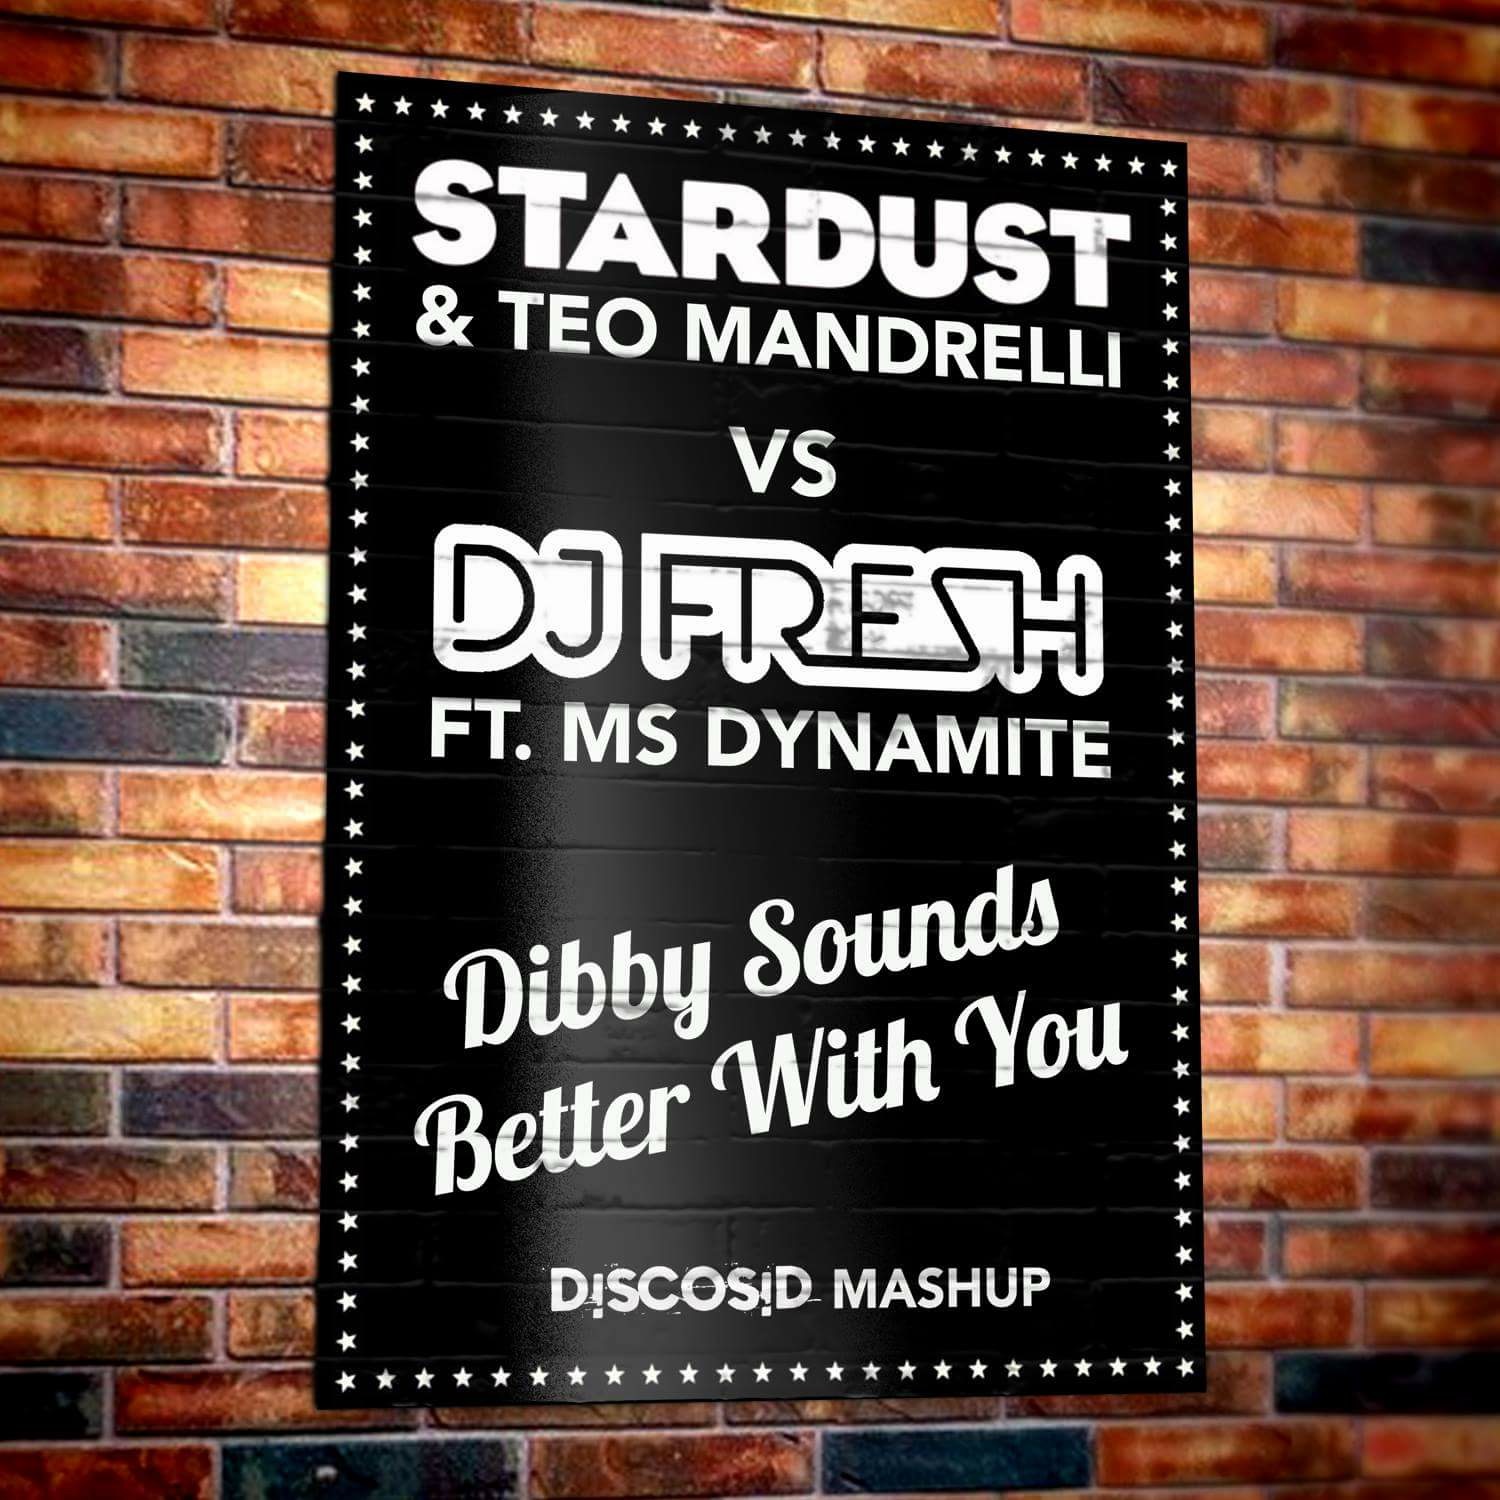 Stardust & Teo Mandrelli Vs Dj Fresh & Ms Dynamite - Dibby Sounds Better With You (Discosid Mashup)